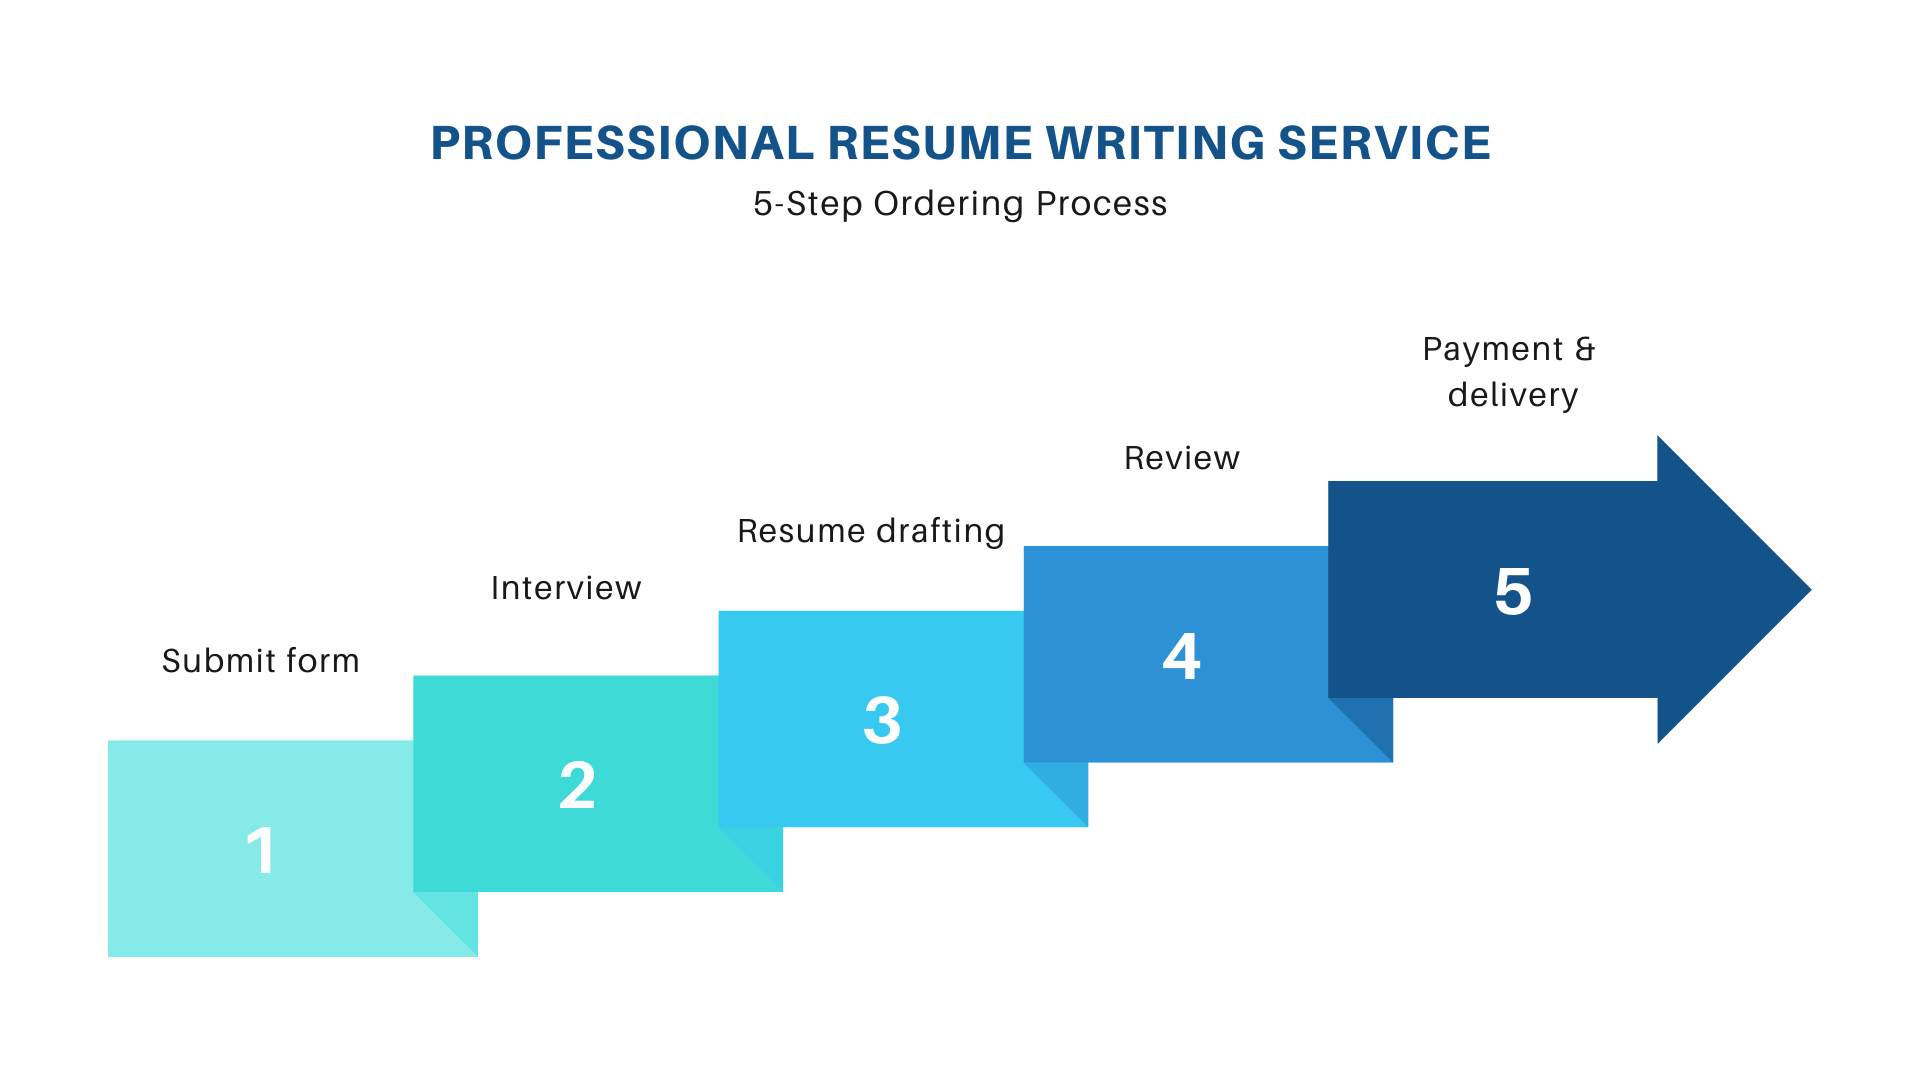 resume writing service process